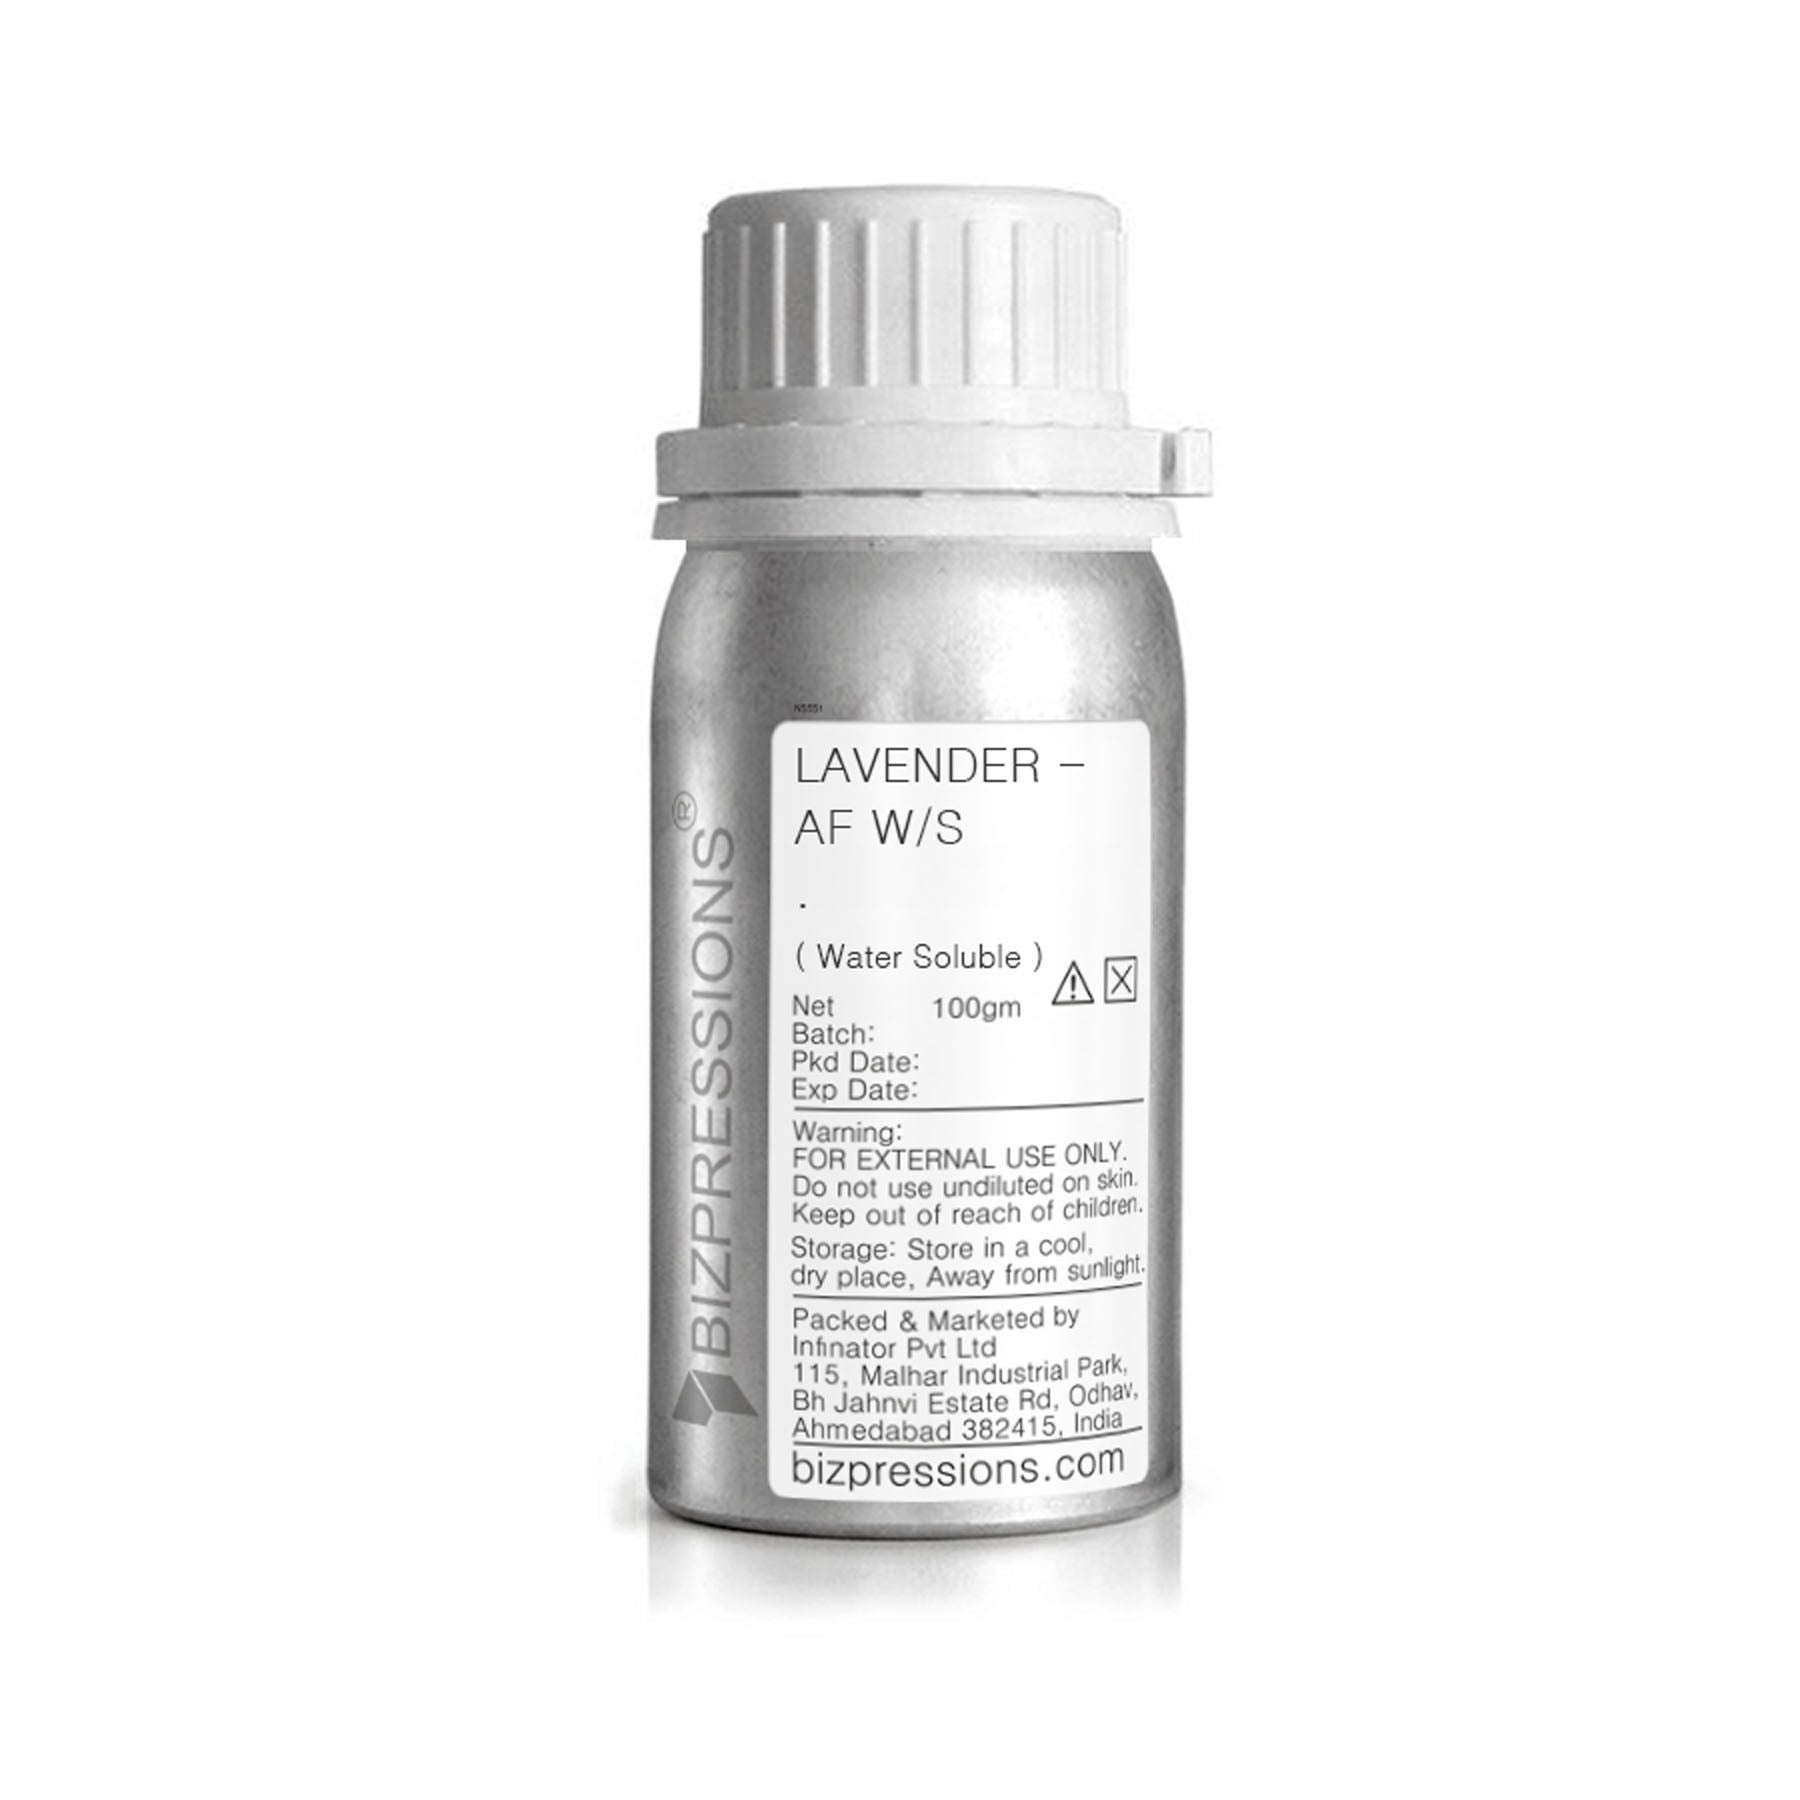 LAVENDER - AF W/S - Fragrance ( Water Soluble ) - 100 gm